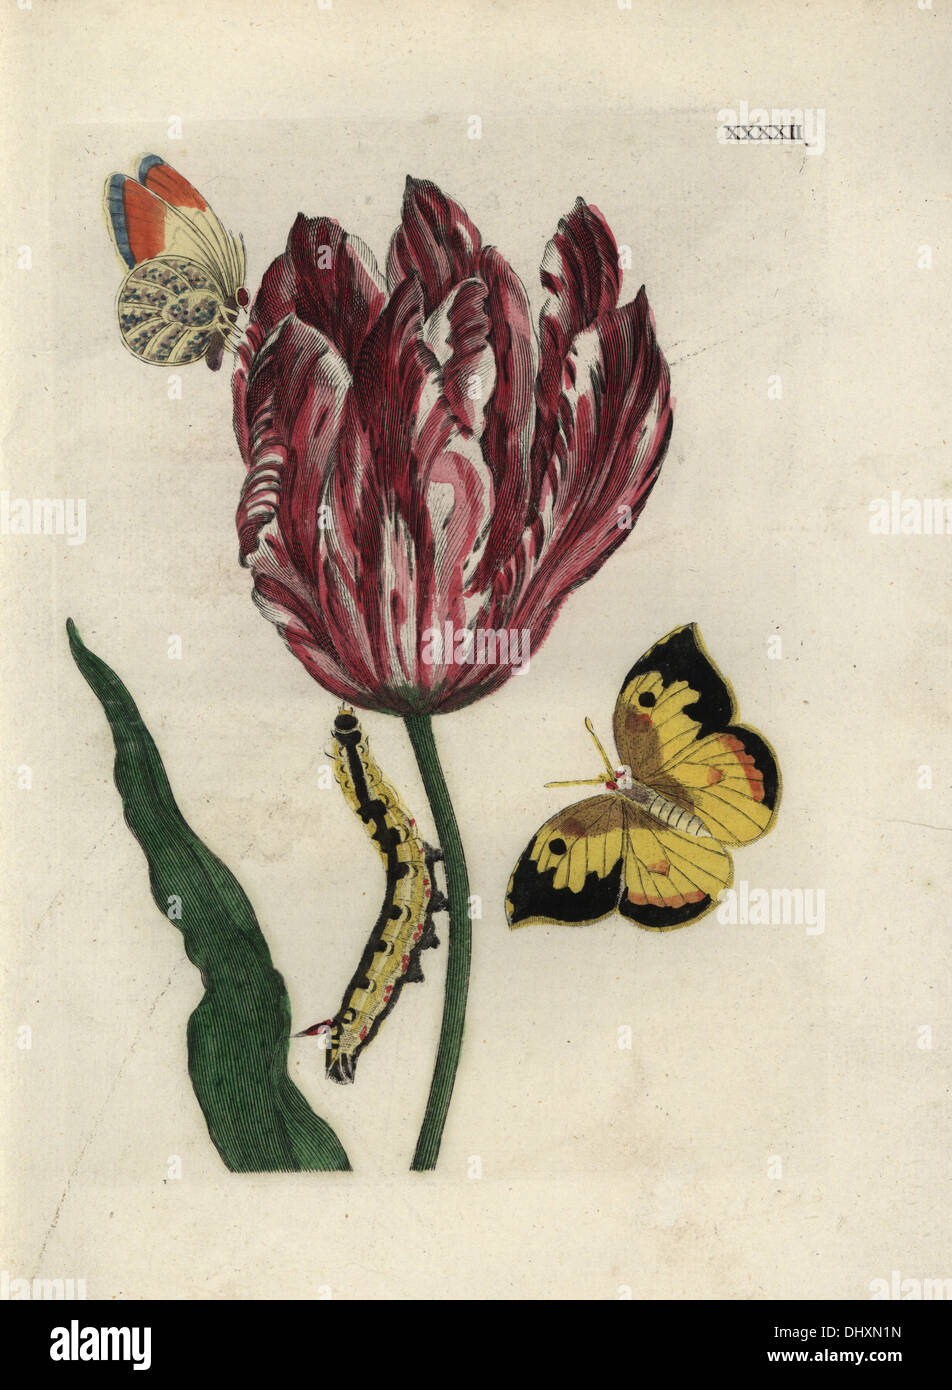 Tulip, Konige Lodewijk (King Ludwig), Tulipa gesneriana, with butterflies and caterpillar. Stock Photo